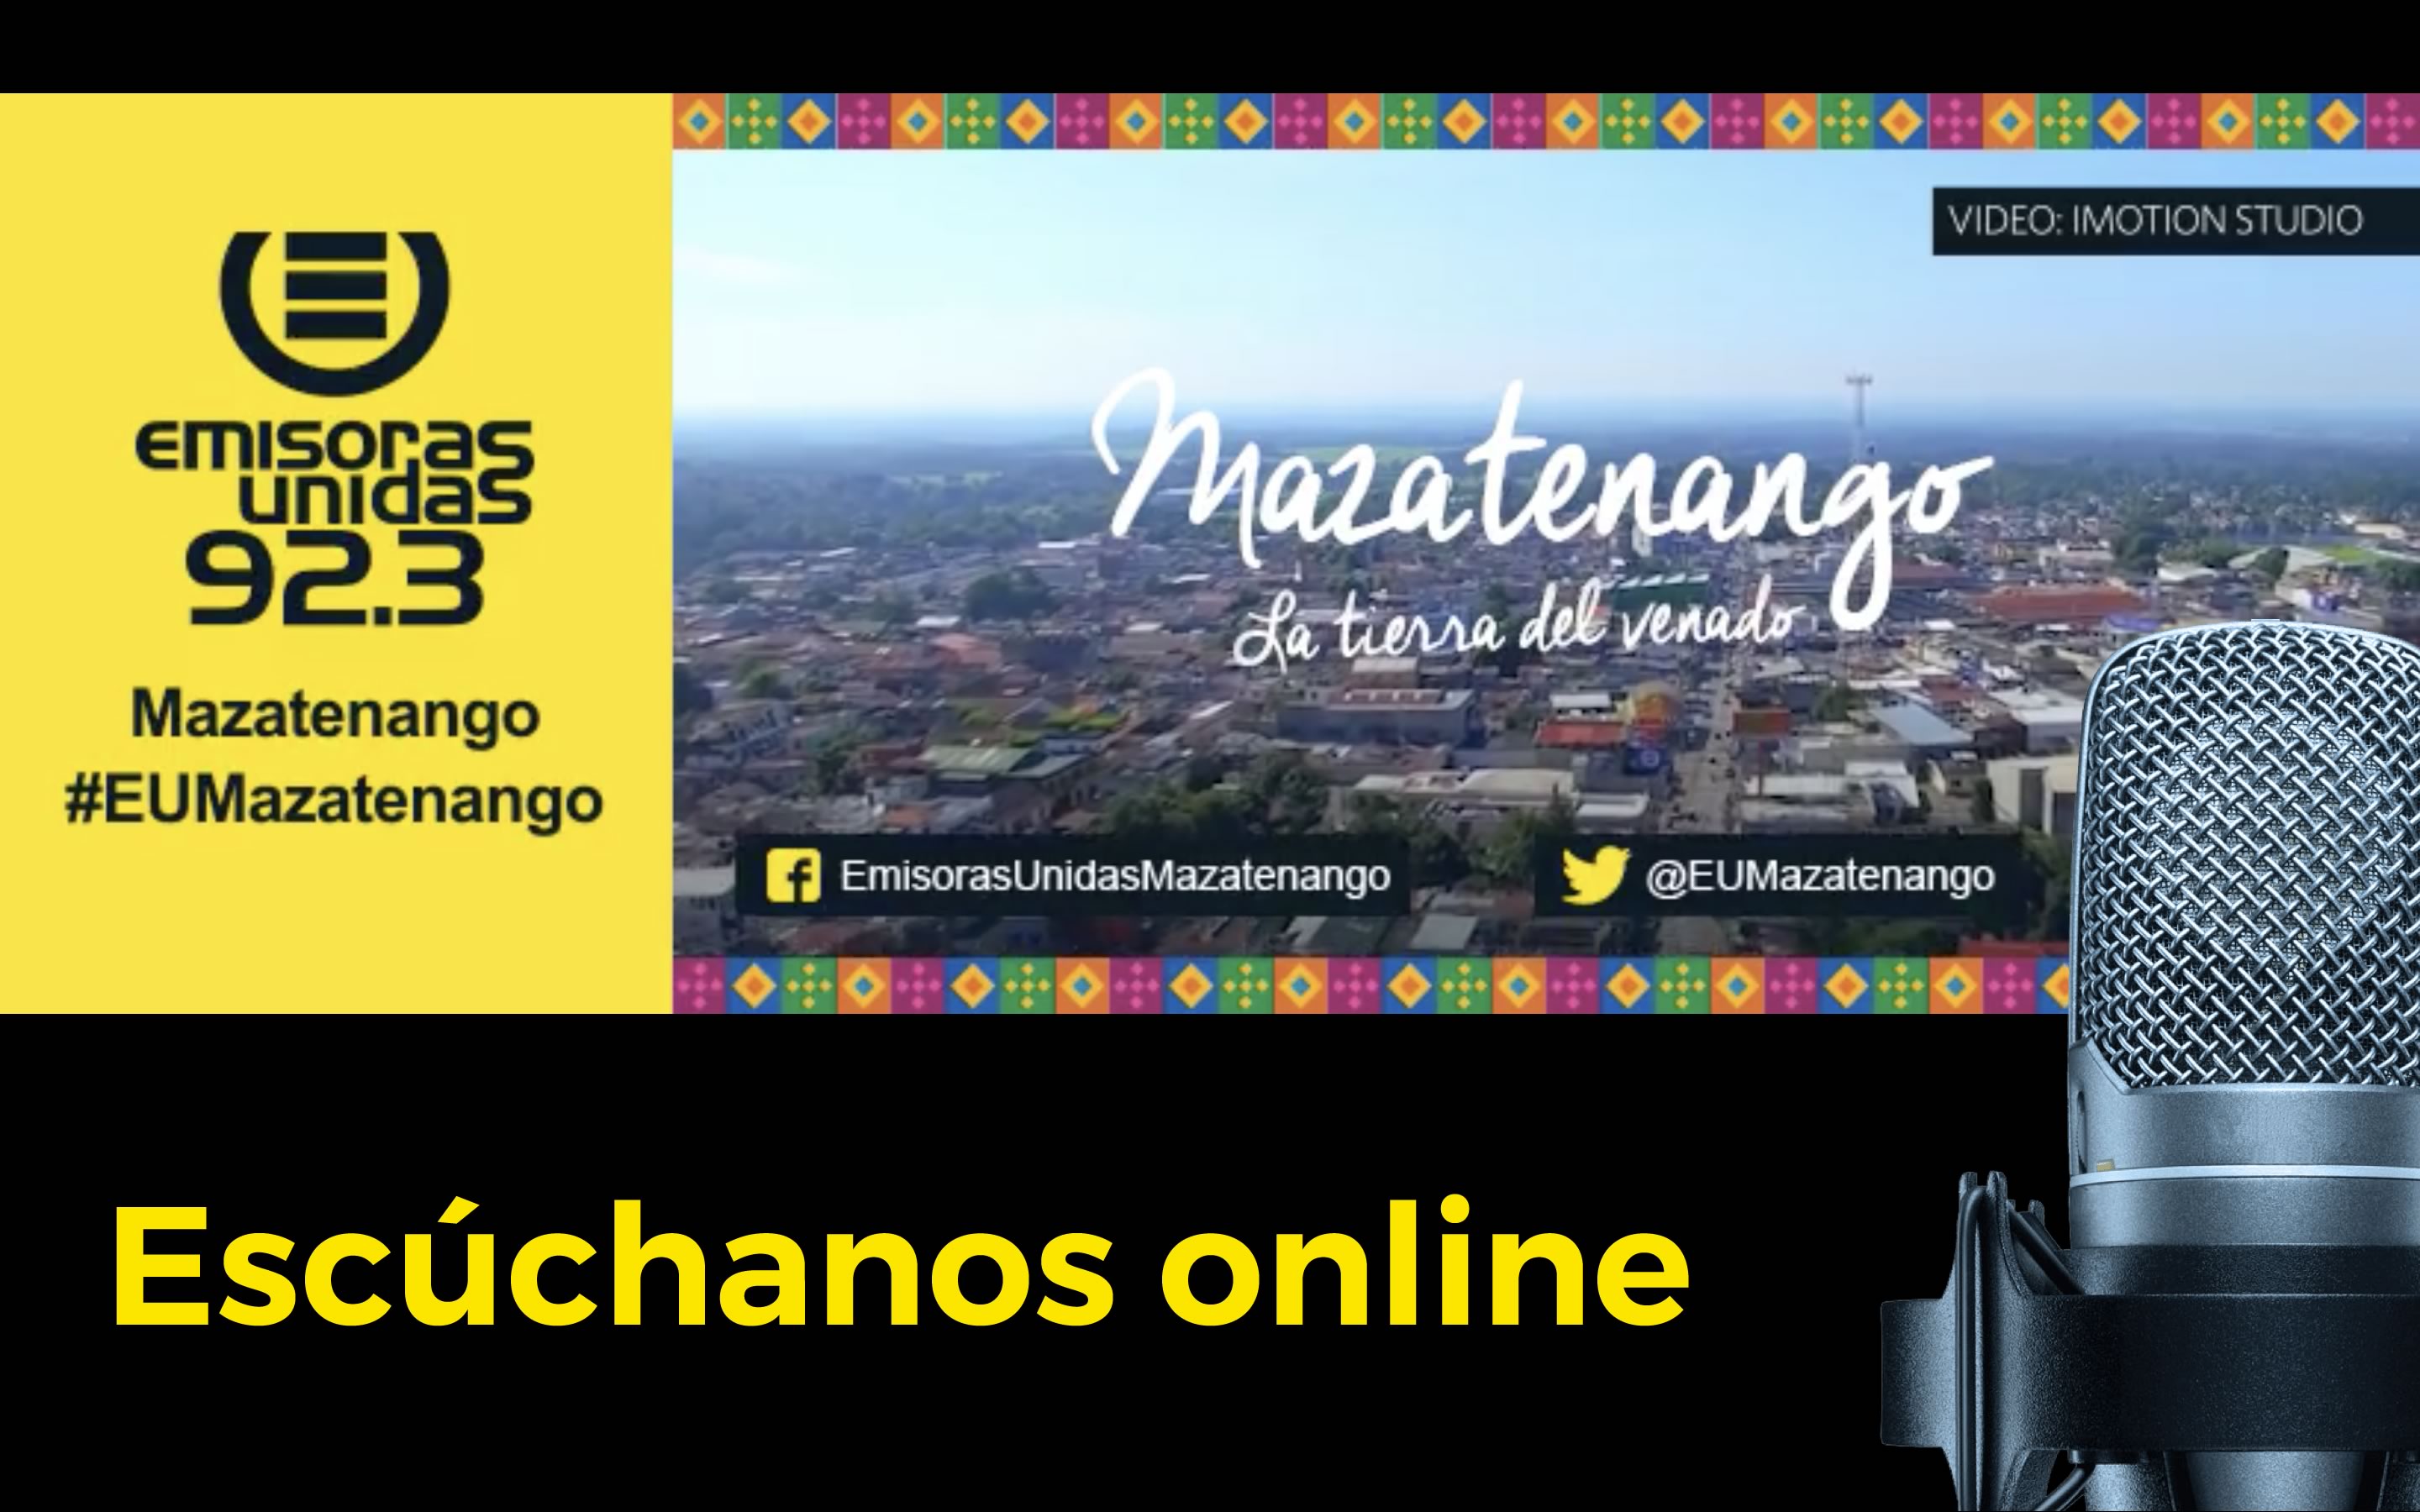 #eumazatenango mazatenango streaming online radio live guatemala emisoras unidas eu